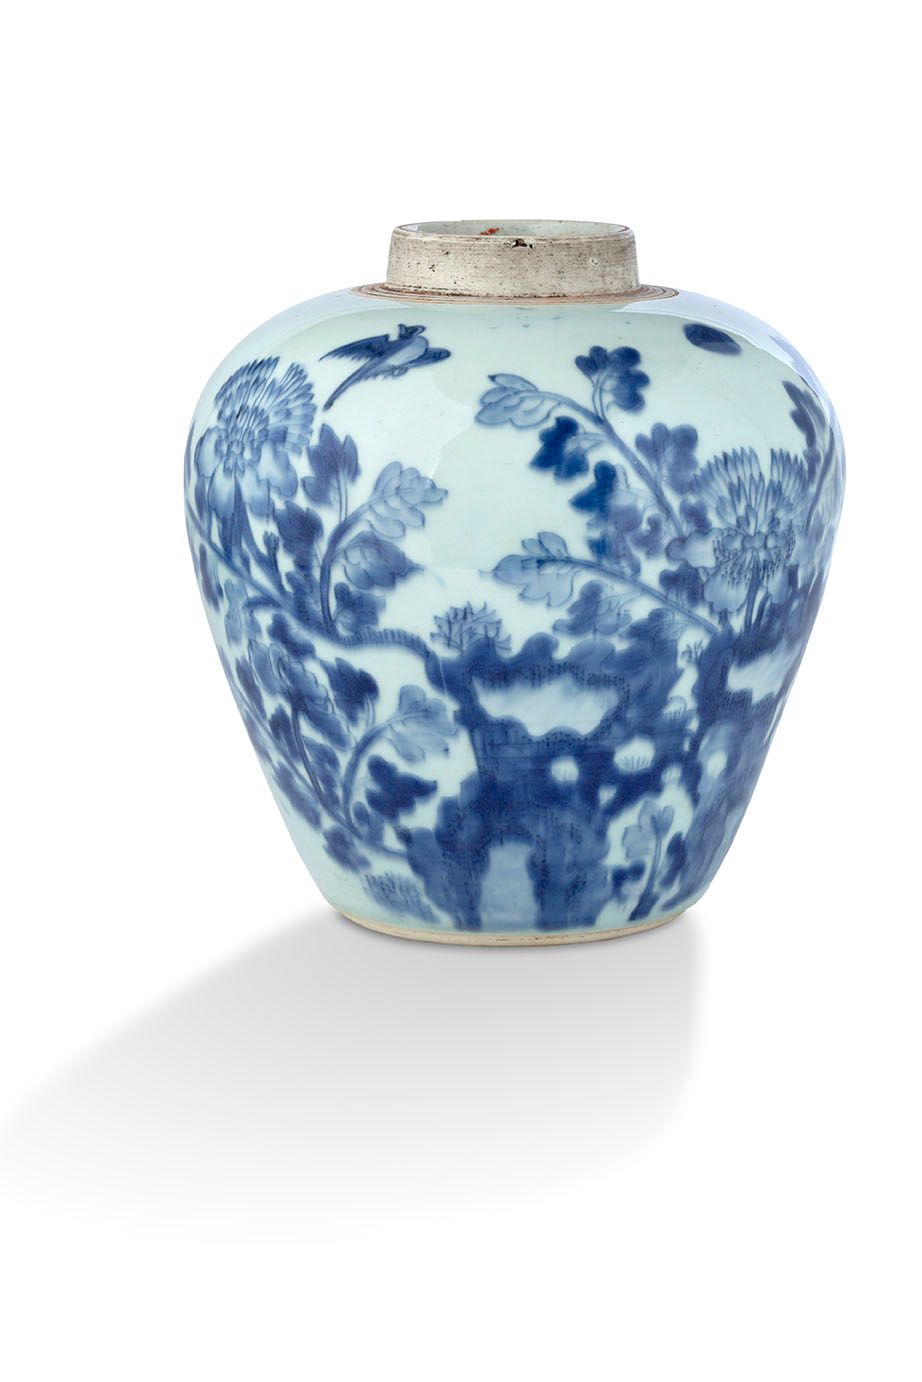 CHINE PÉRIODE TRANSITION, MILIEU DU XVIIe SIÈCLE Ginger pot
In blue-white porcel&hellip;